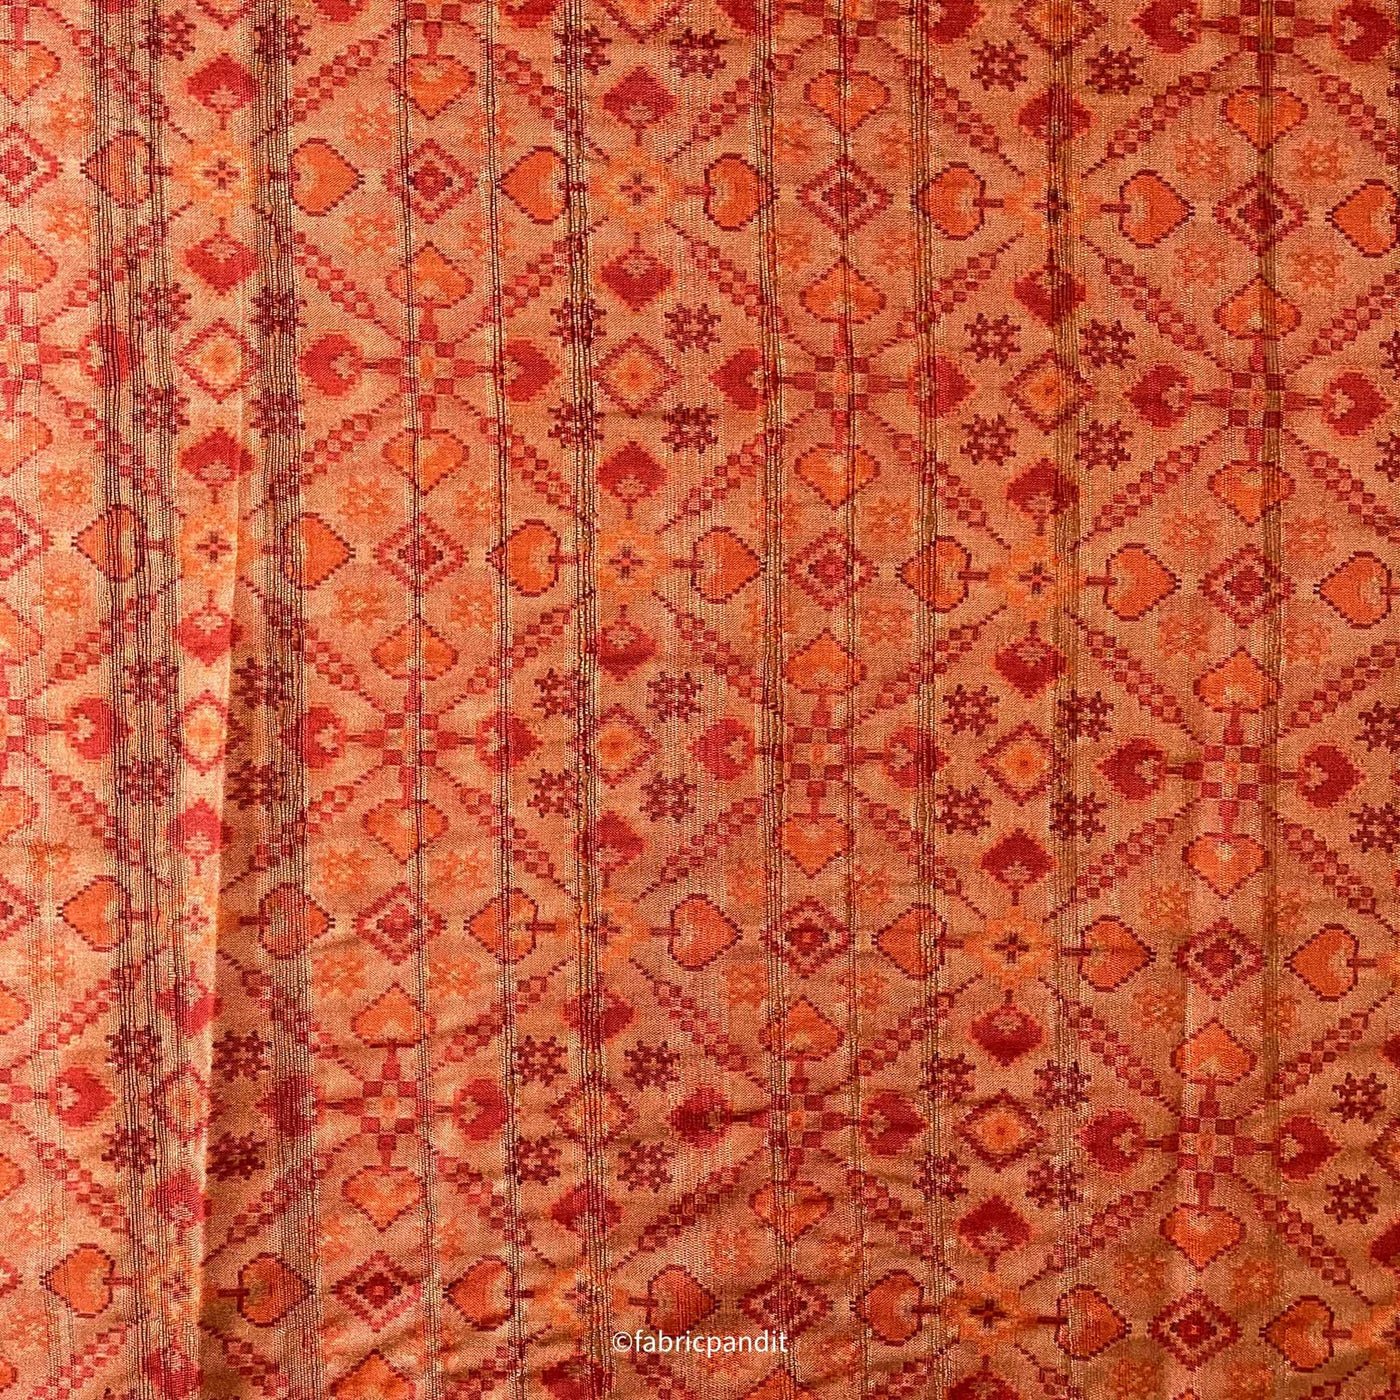 Fabric Pandit Fabric Muted Saffron Patola Digital Printed Tussar Silk Fabric (Width 44 Inches)